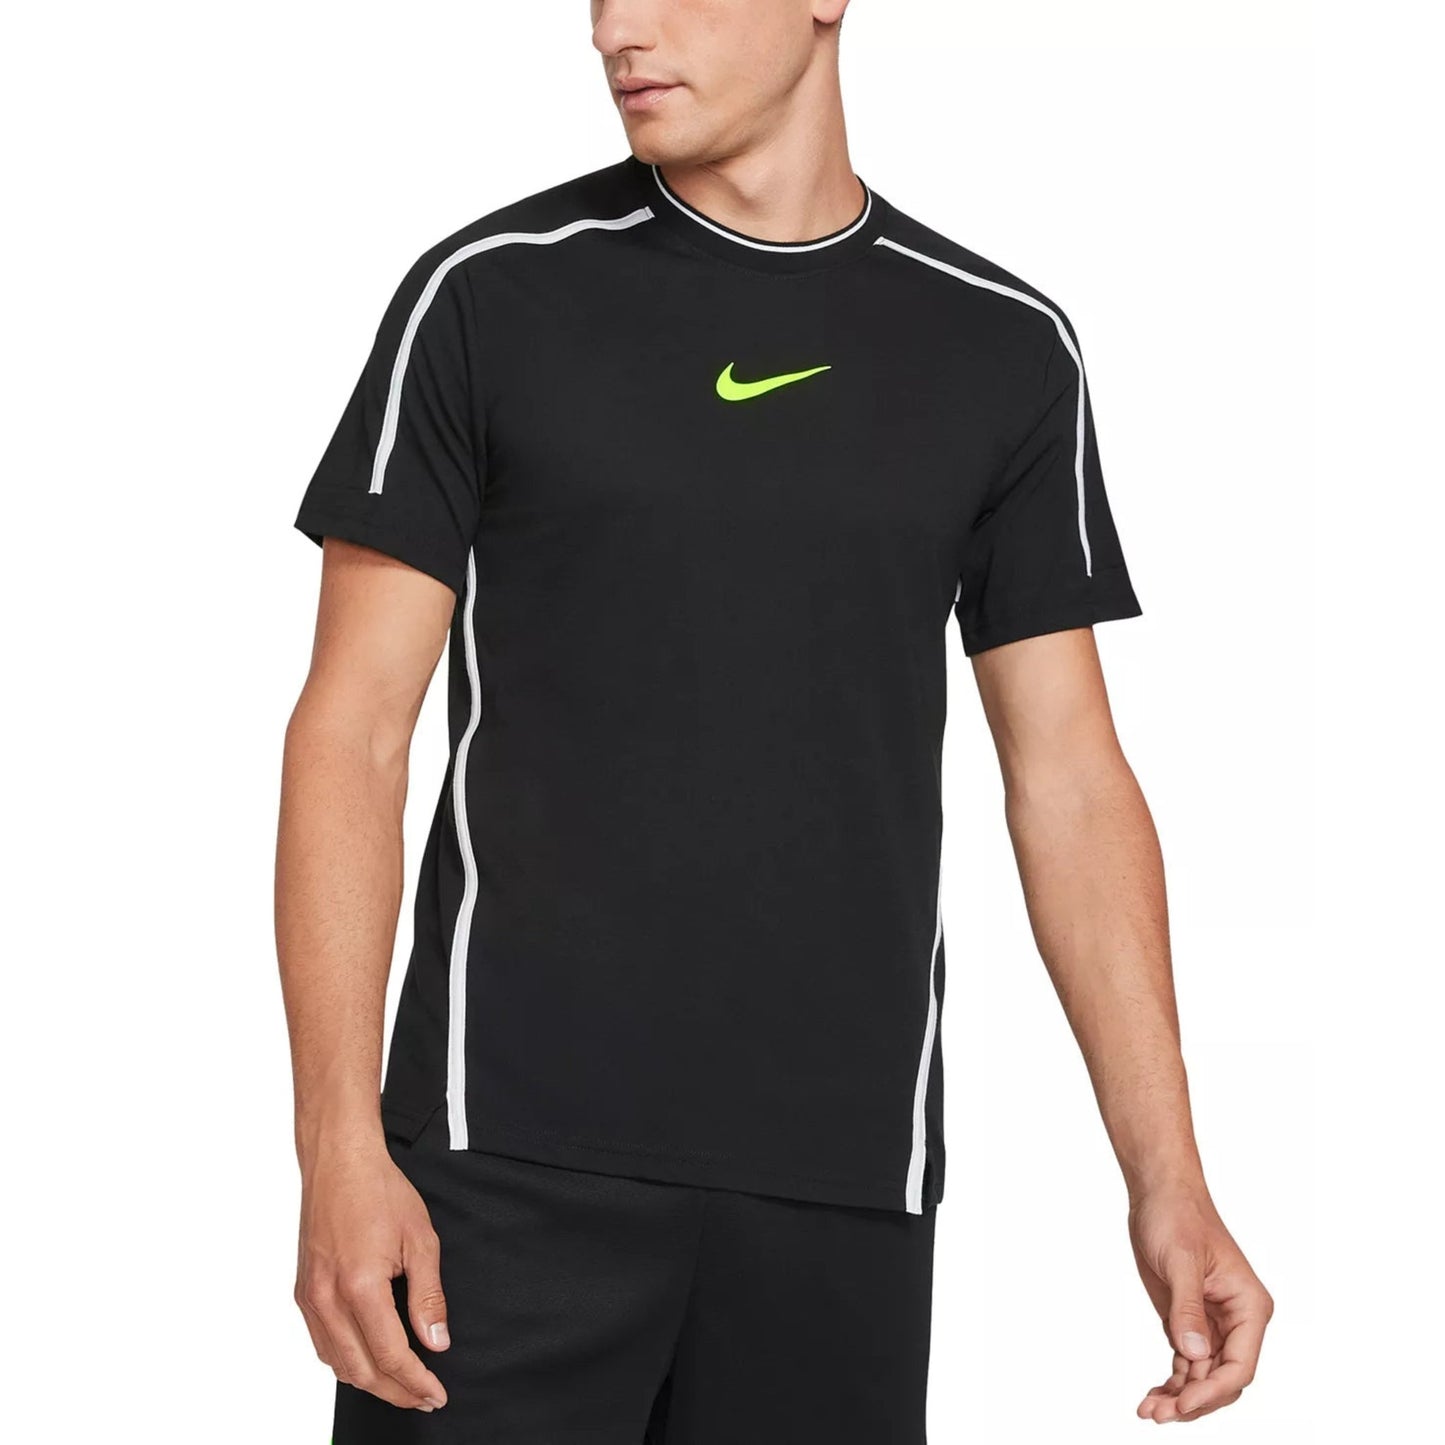 Nike Mens Dri-FIT Sport Clash Training Shirt, Black